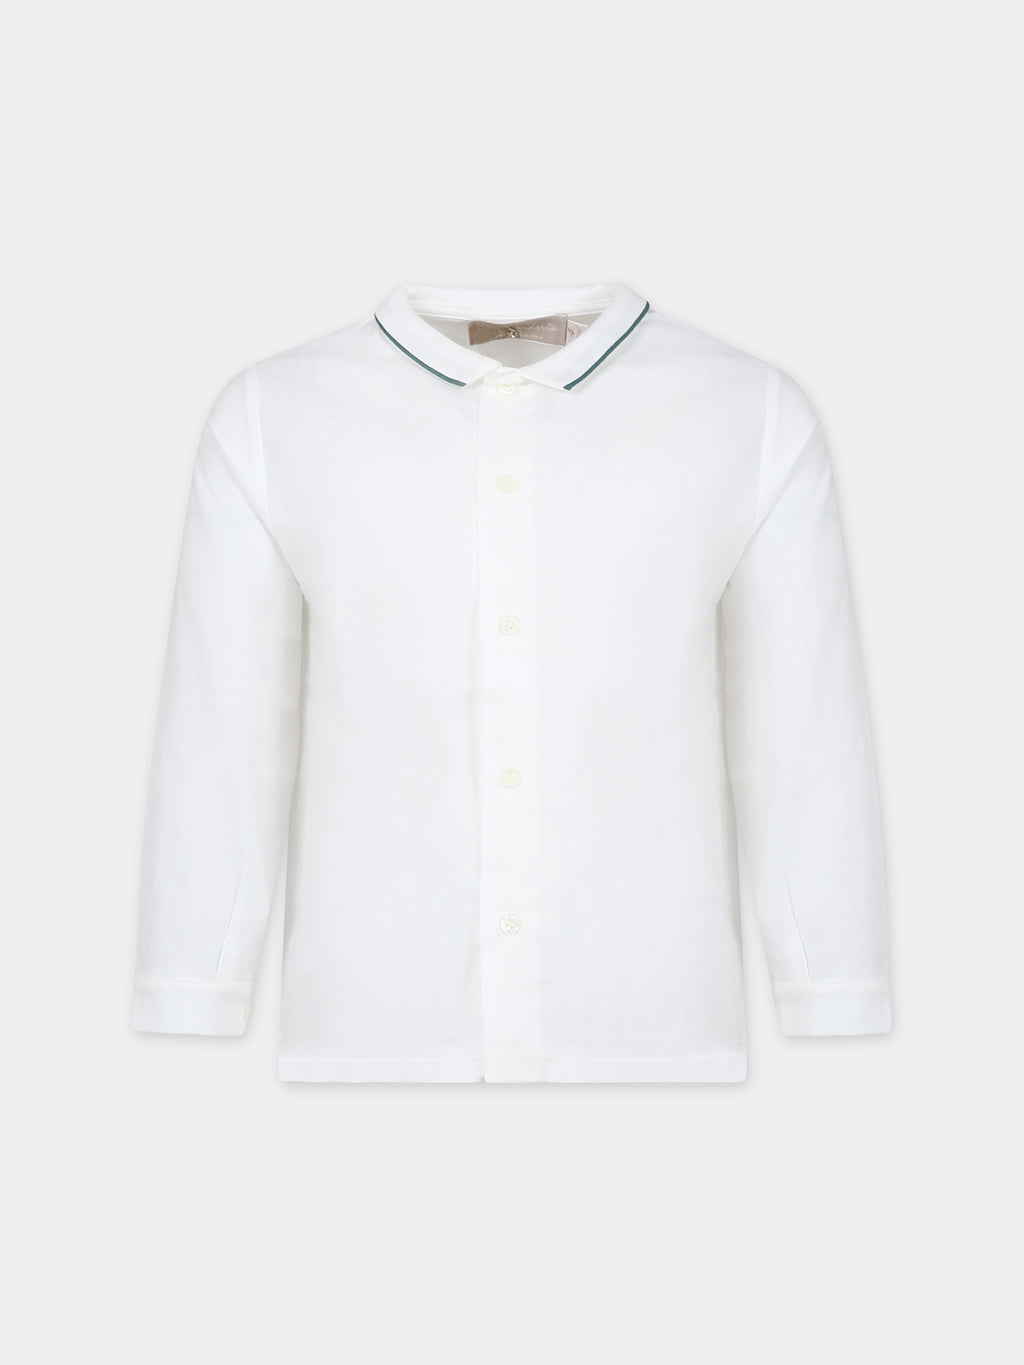 White shirt for boy